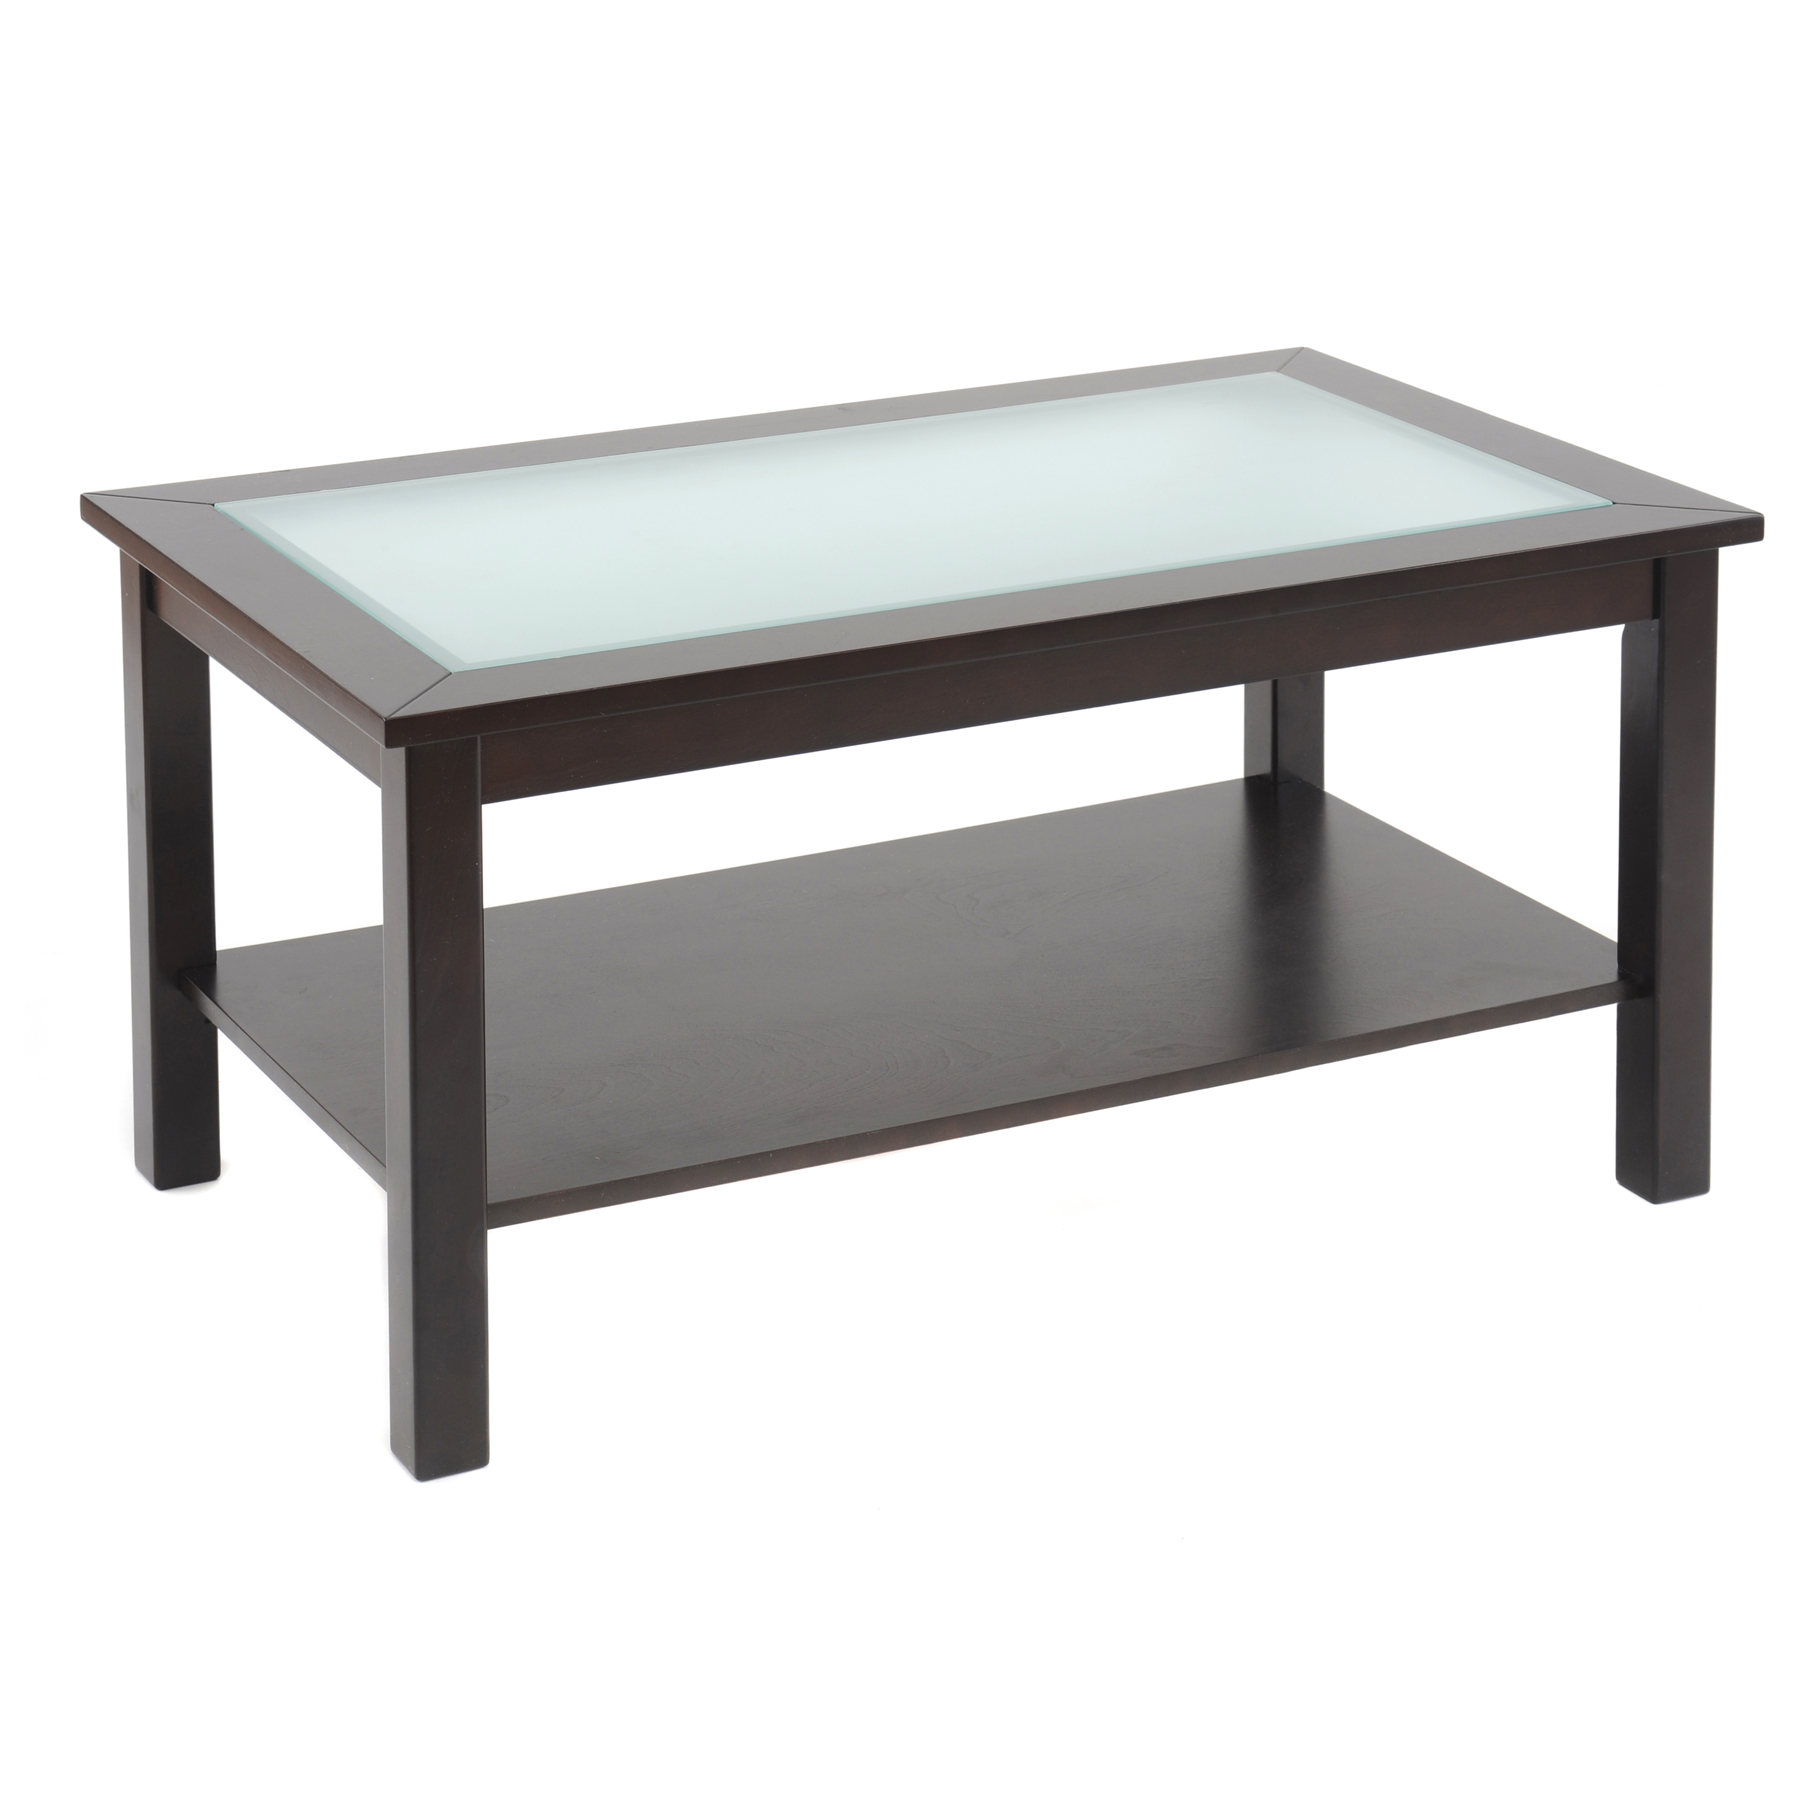 modern glass coffee table designs photo - 8